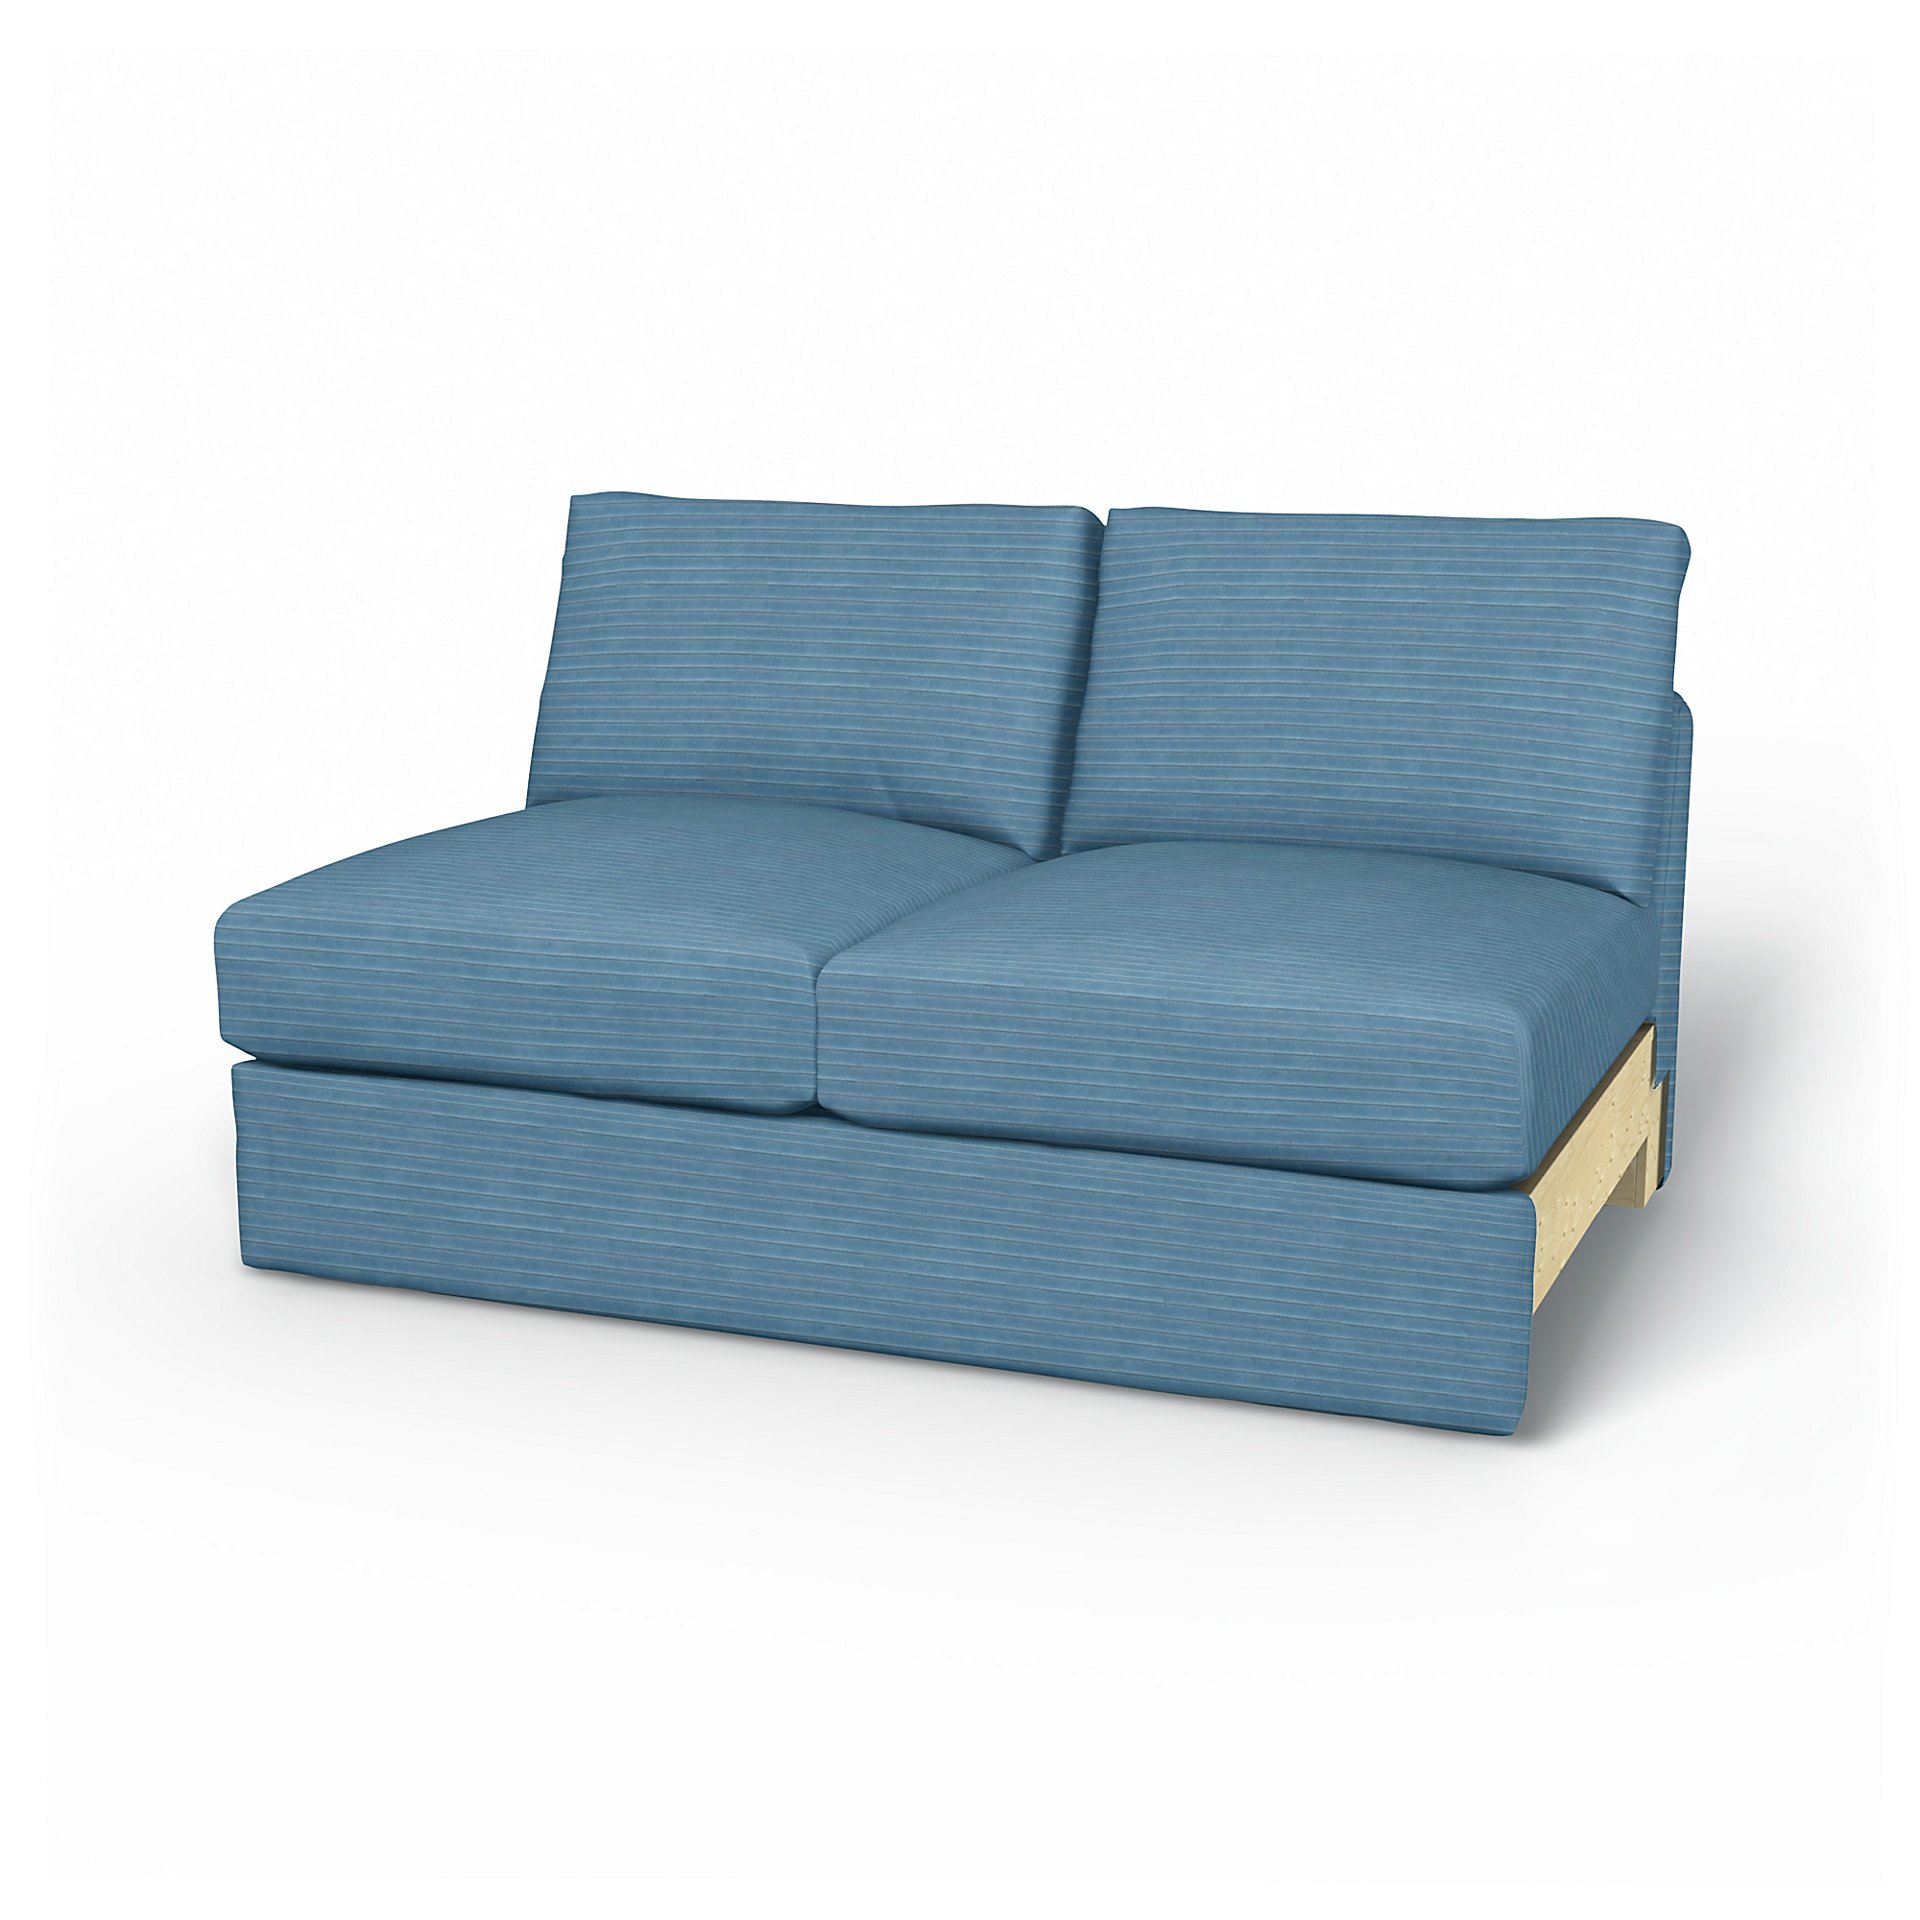 IKEA - Vimle 2 Seat Section Cover, Sky Blue, Corduroy - Bemz